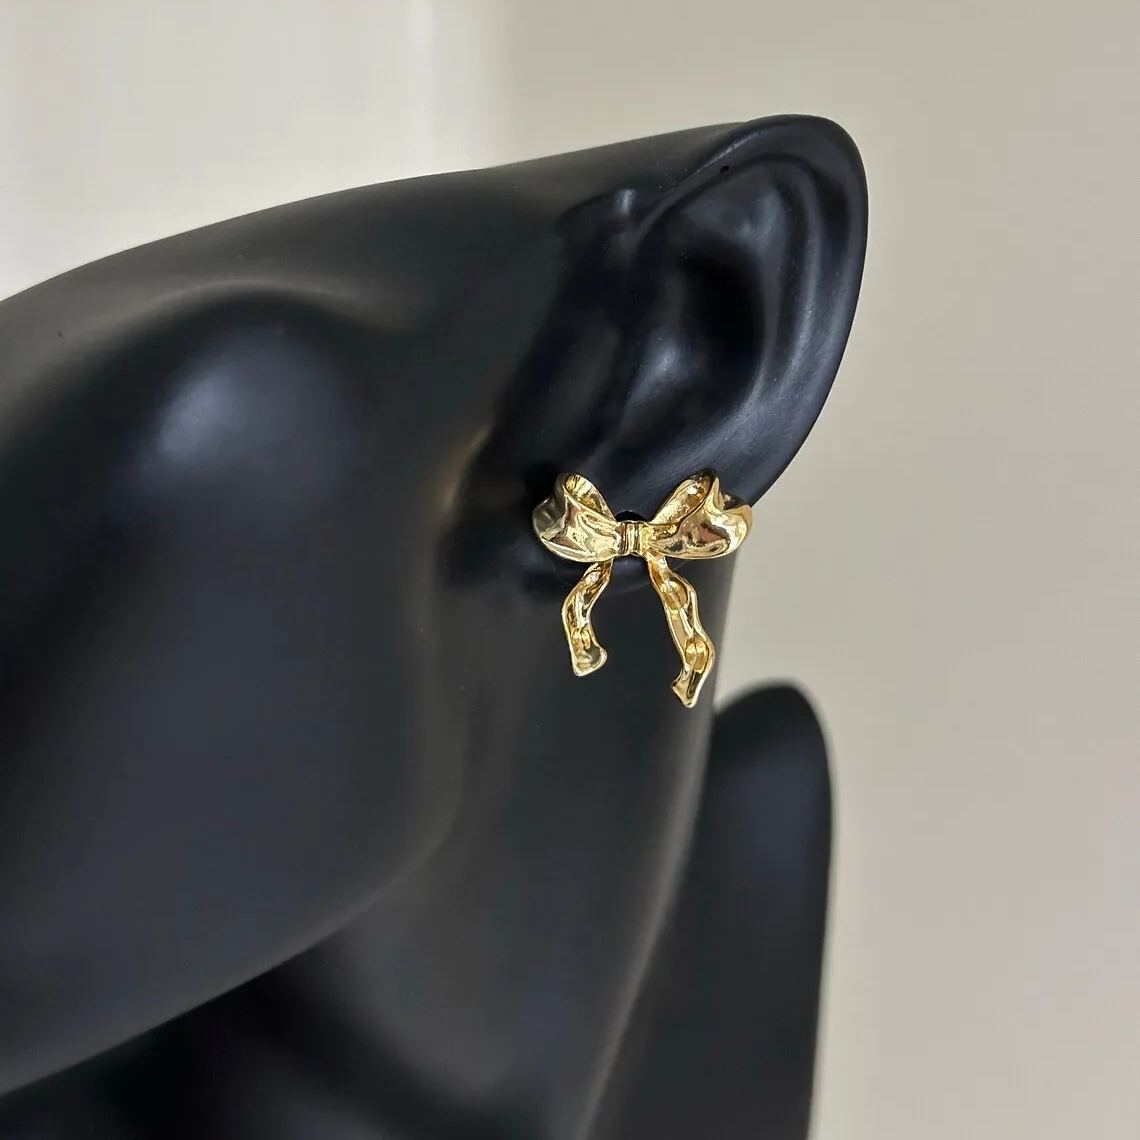 [Copy]Circle Hoop Name Earrings Personalized Gold Plated Name Earrings 